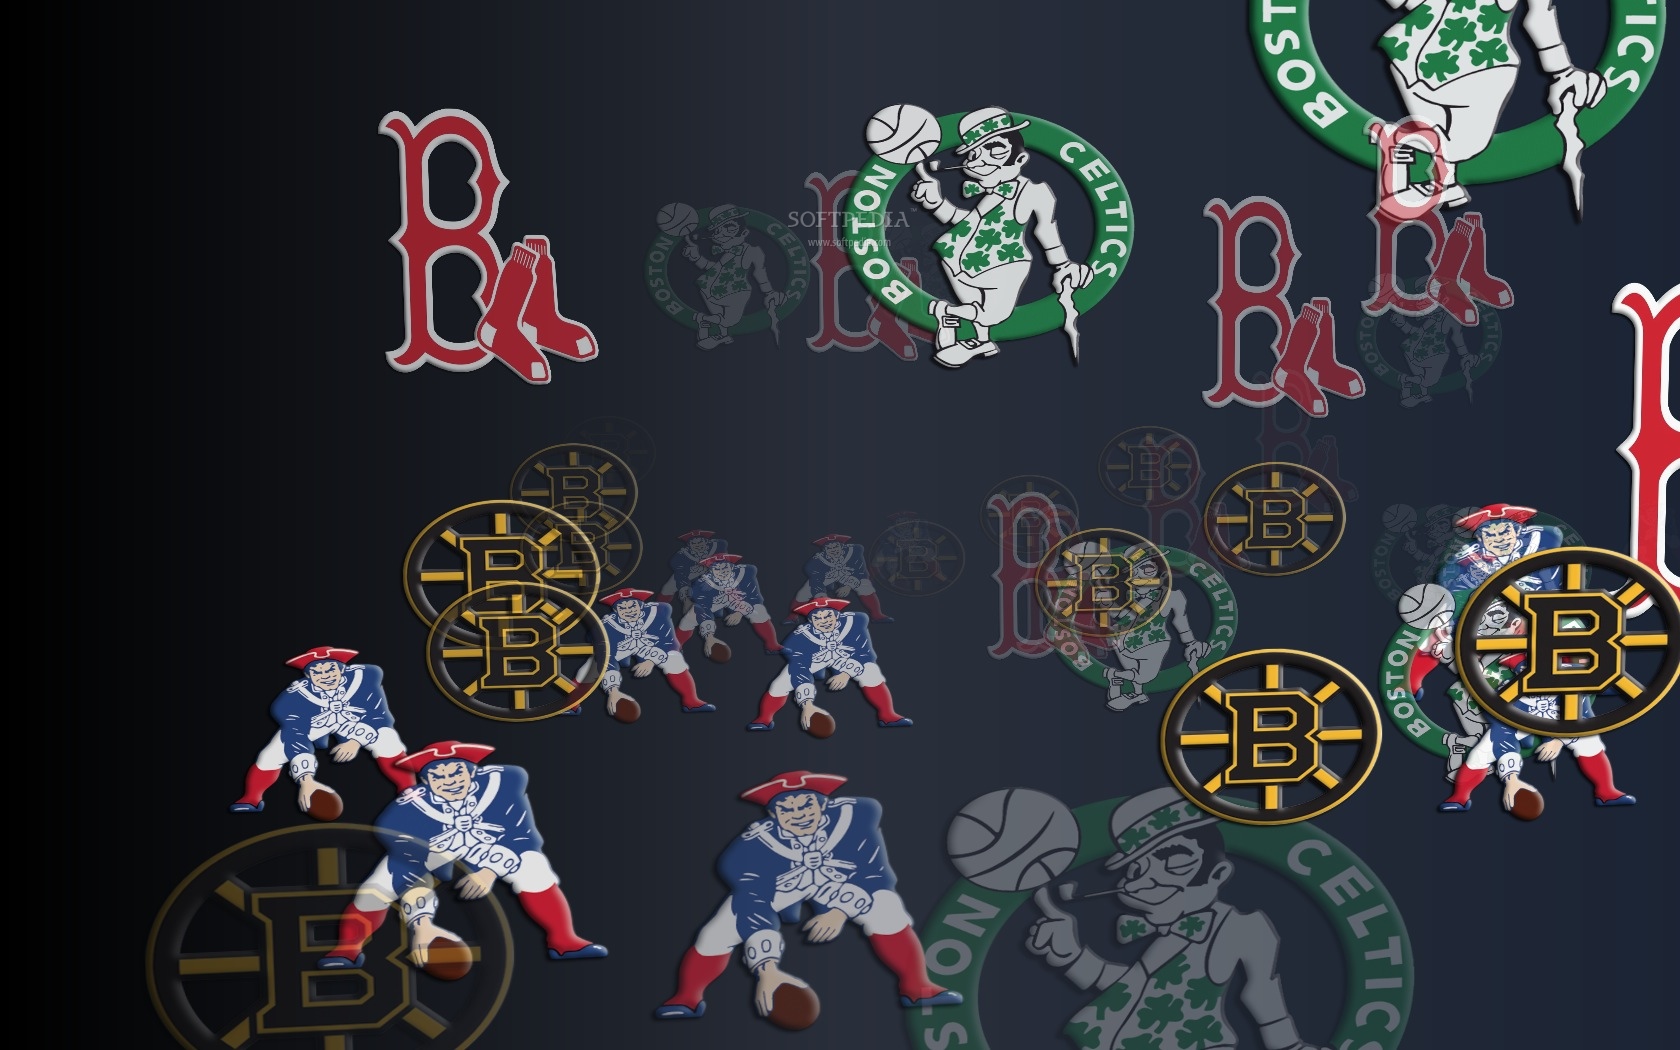 Boston Sports Desktop Wallpaper Desktop Image